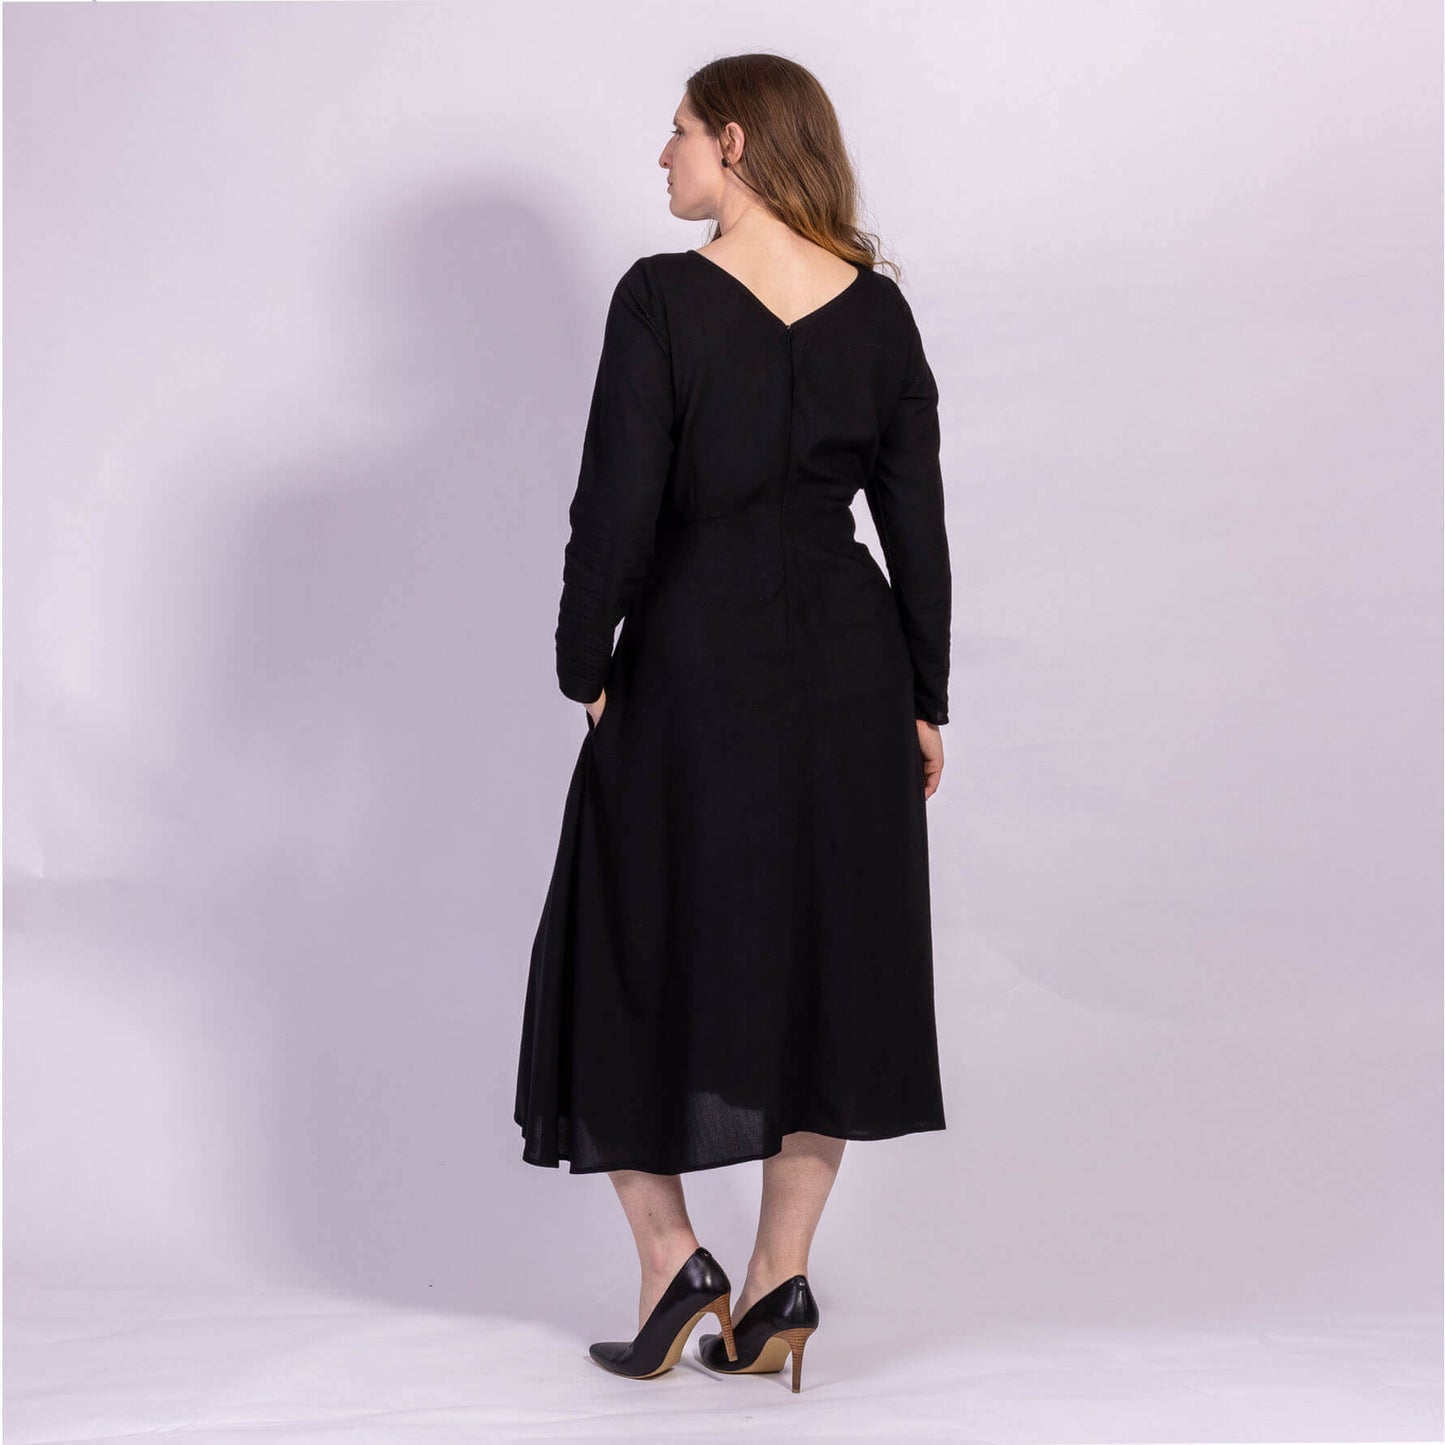 long sleeve black designer dress